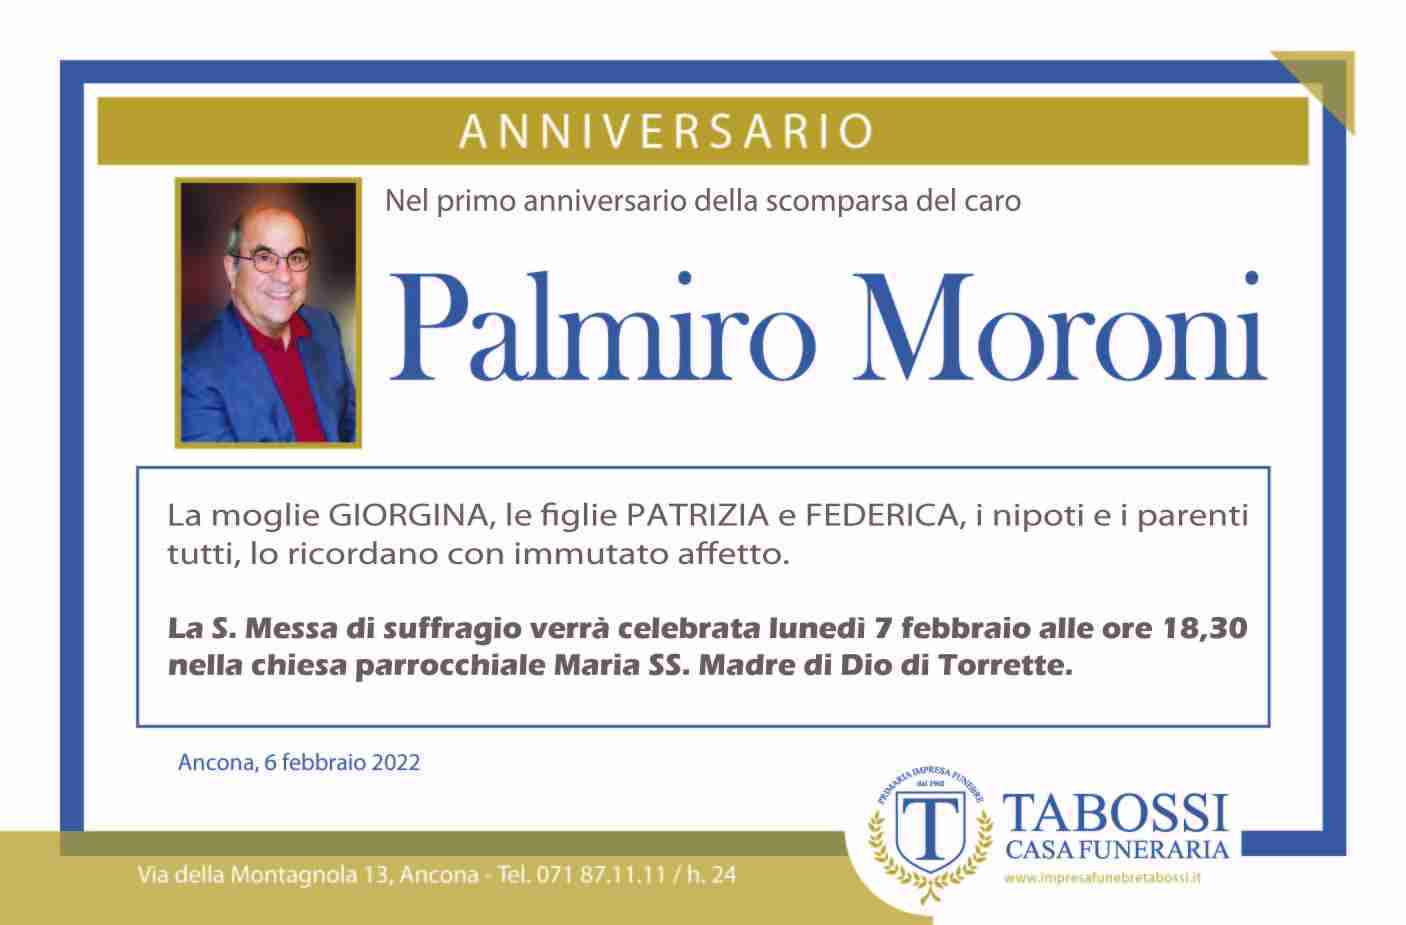 Palmiro Moroni